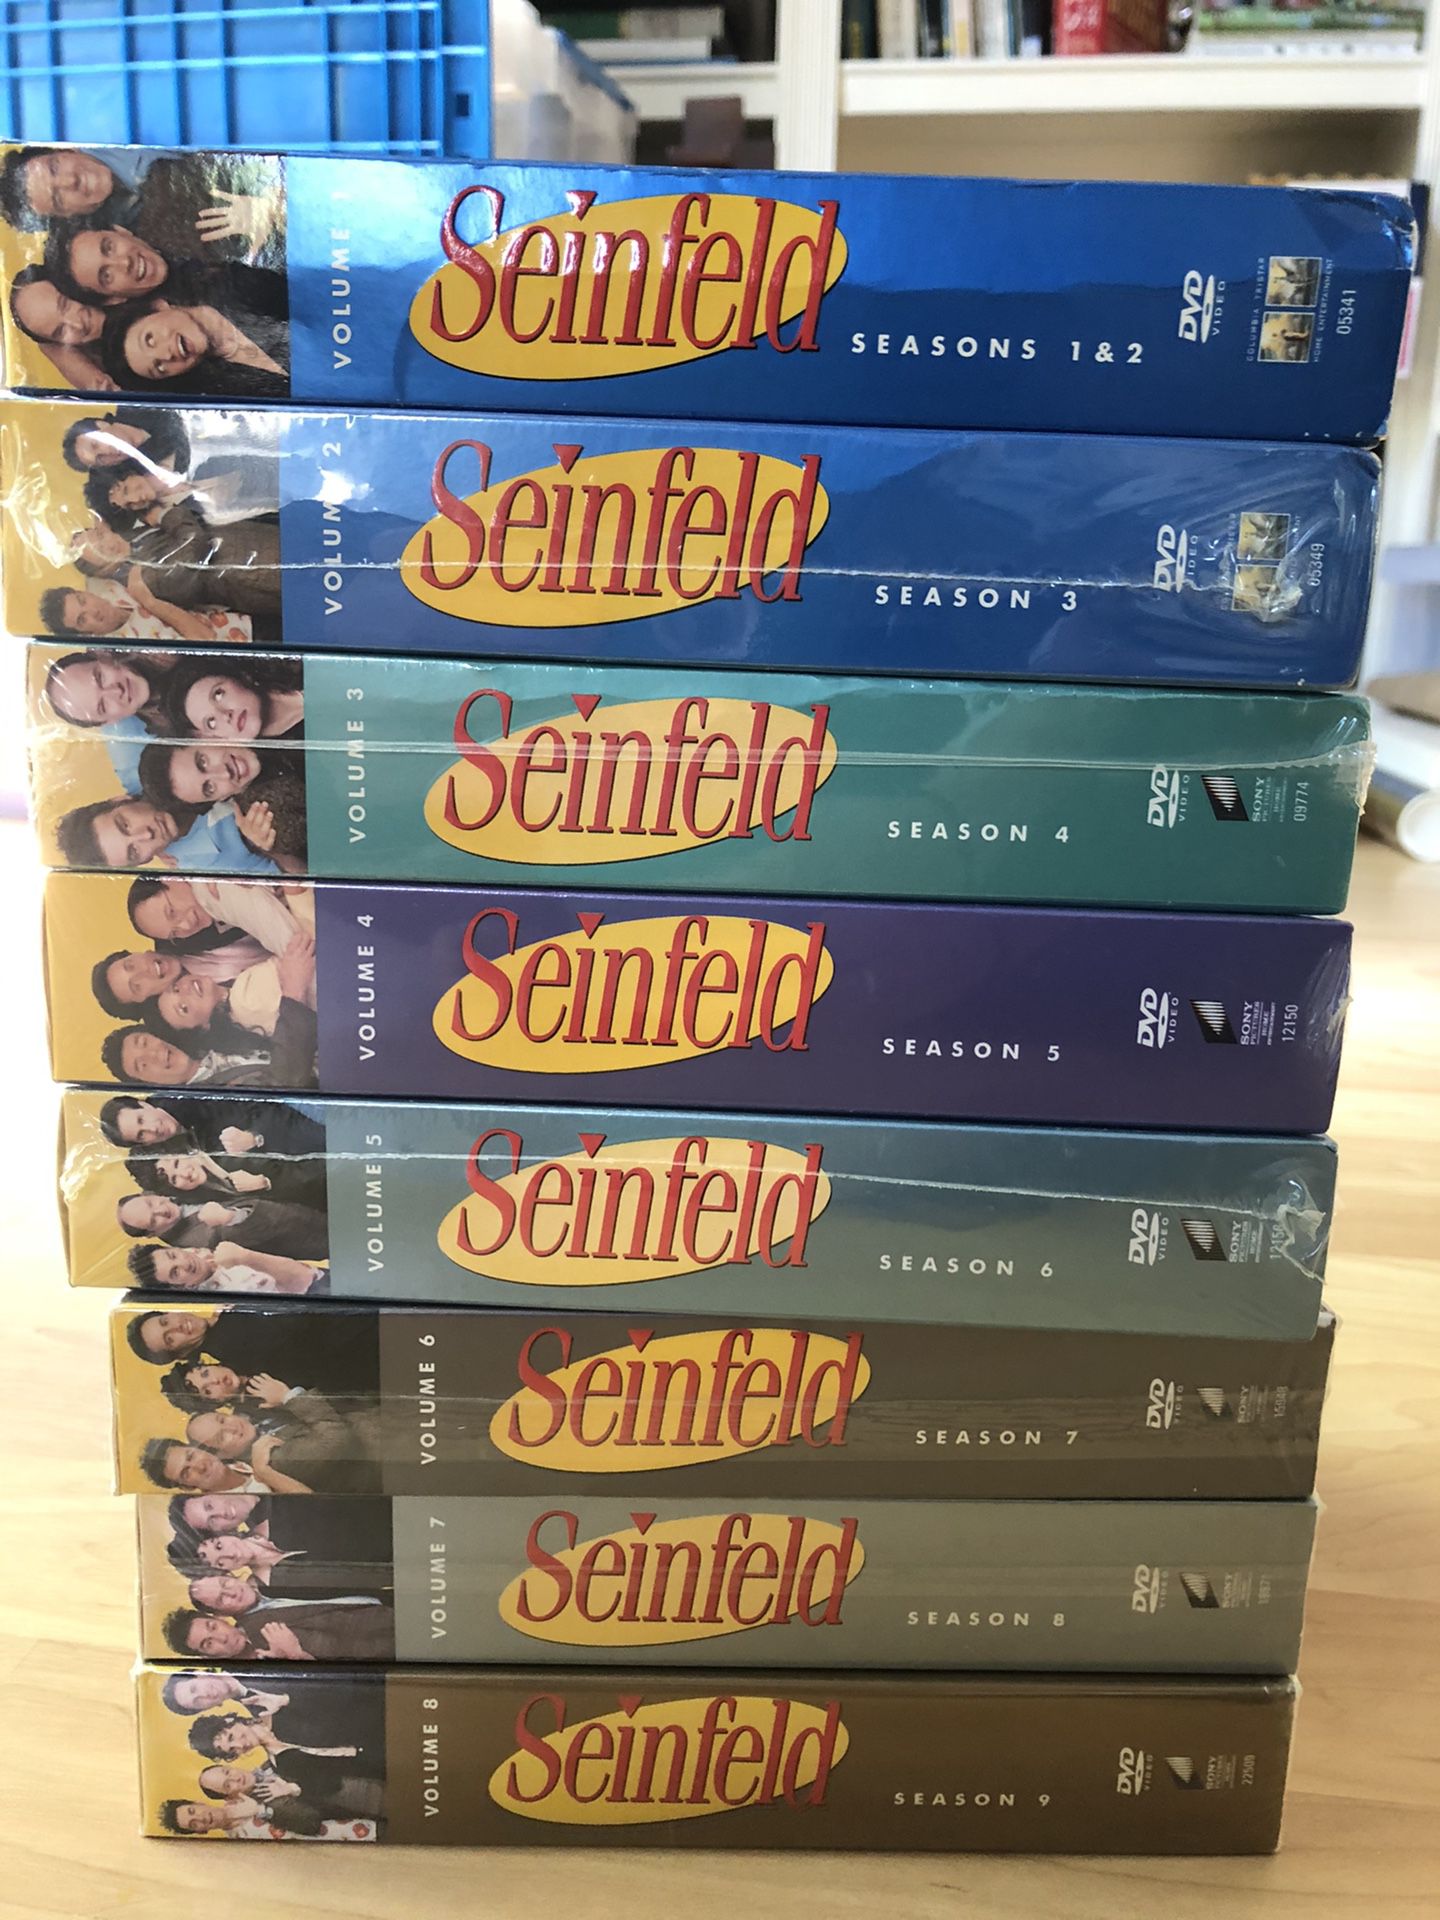 Seinfeld - complete series (seasons 1-9) unopened